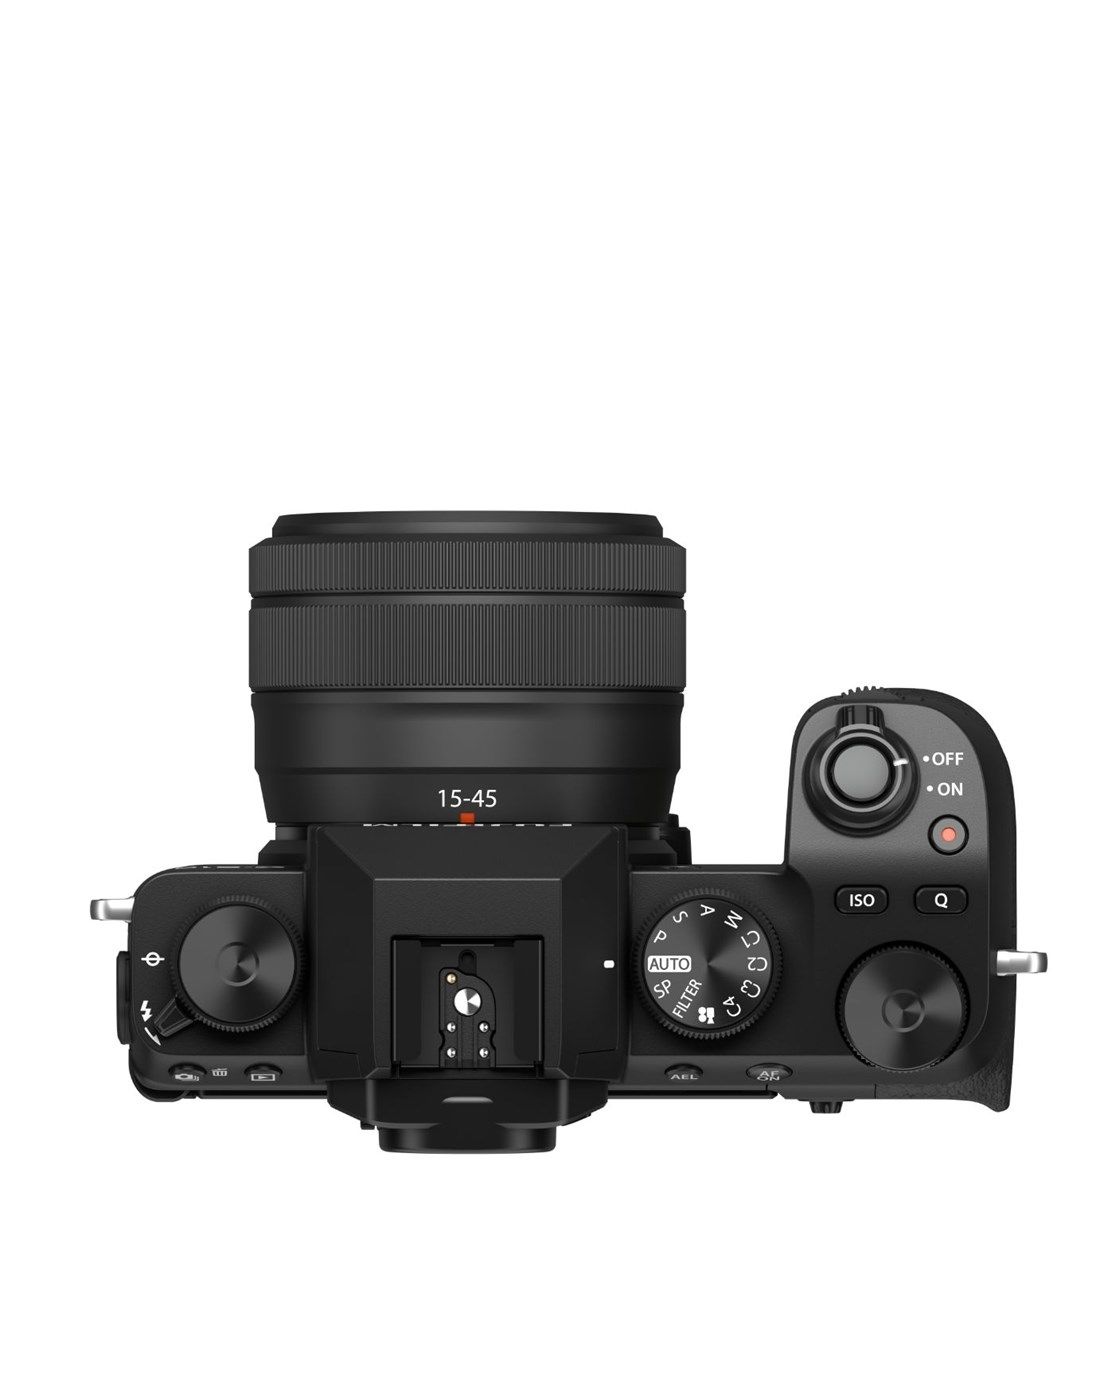 Fujifilm X-S10 Camera with XC 15-45mm F3.5-5.6 OIS PZ Lens - Black